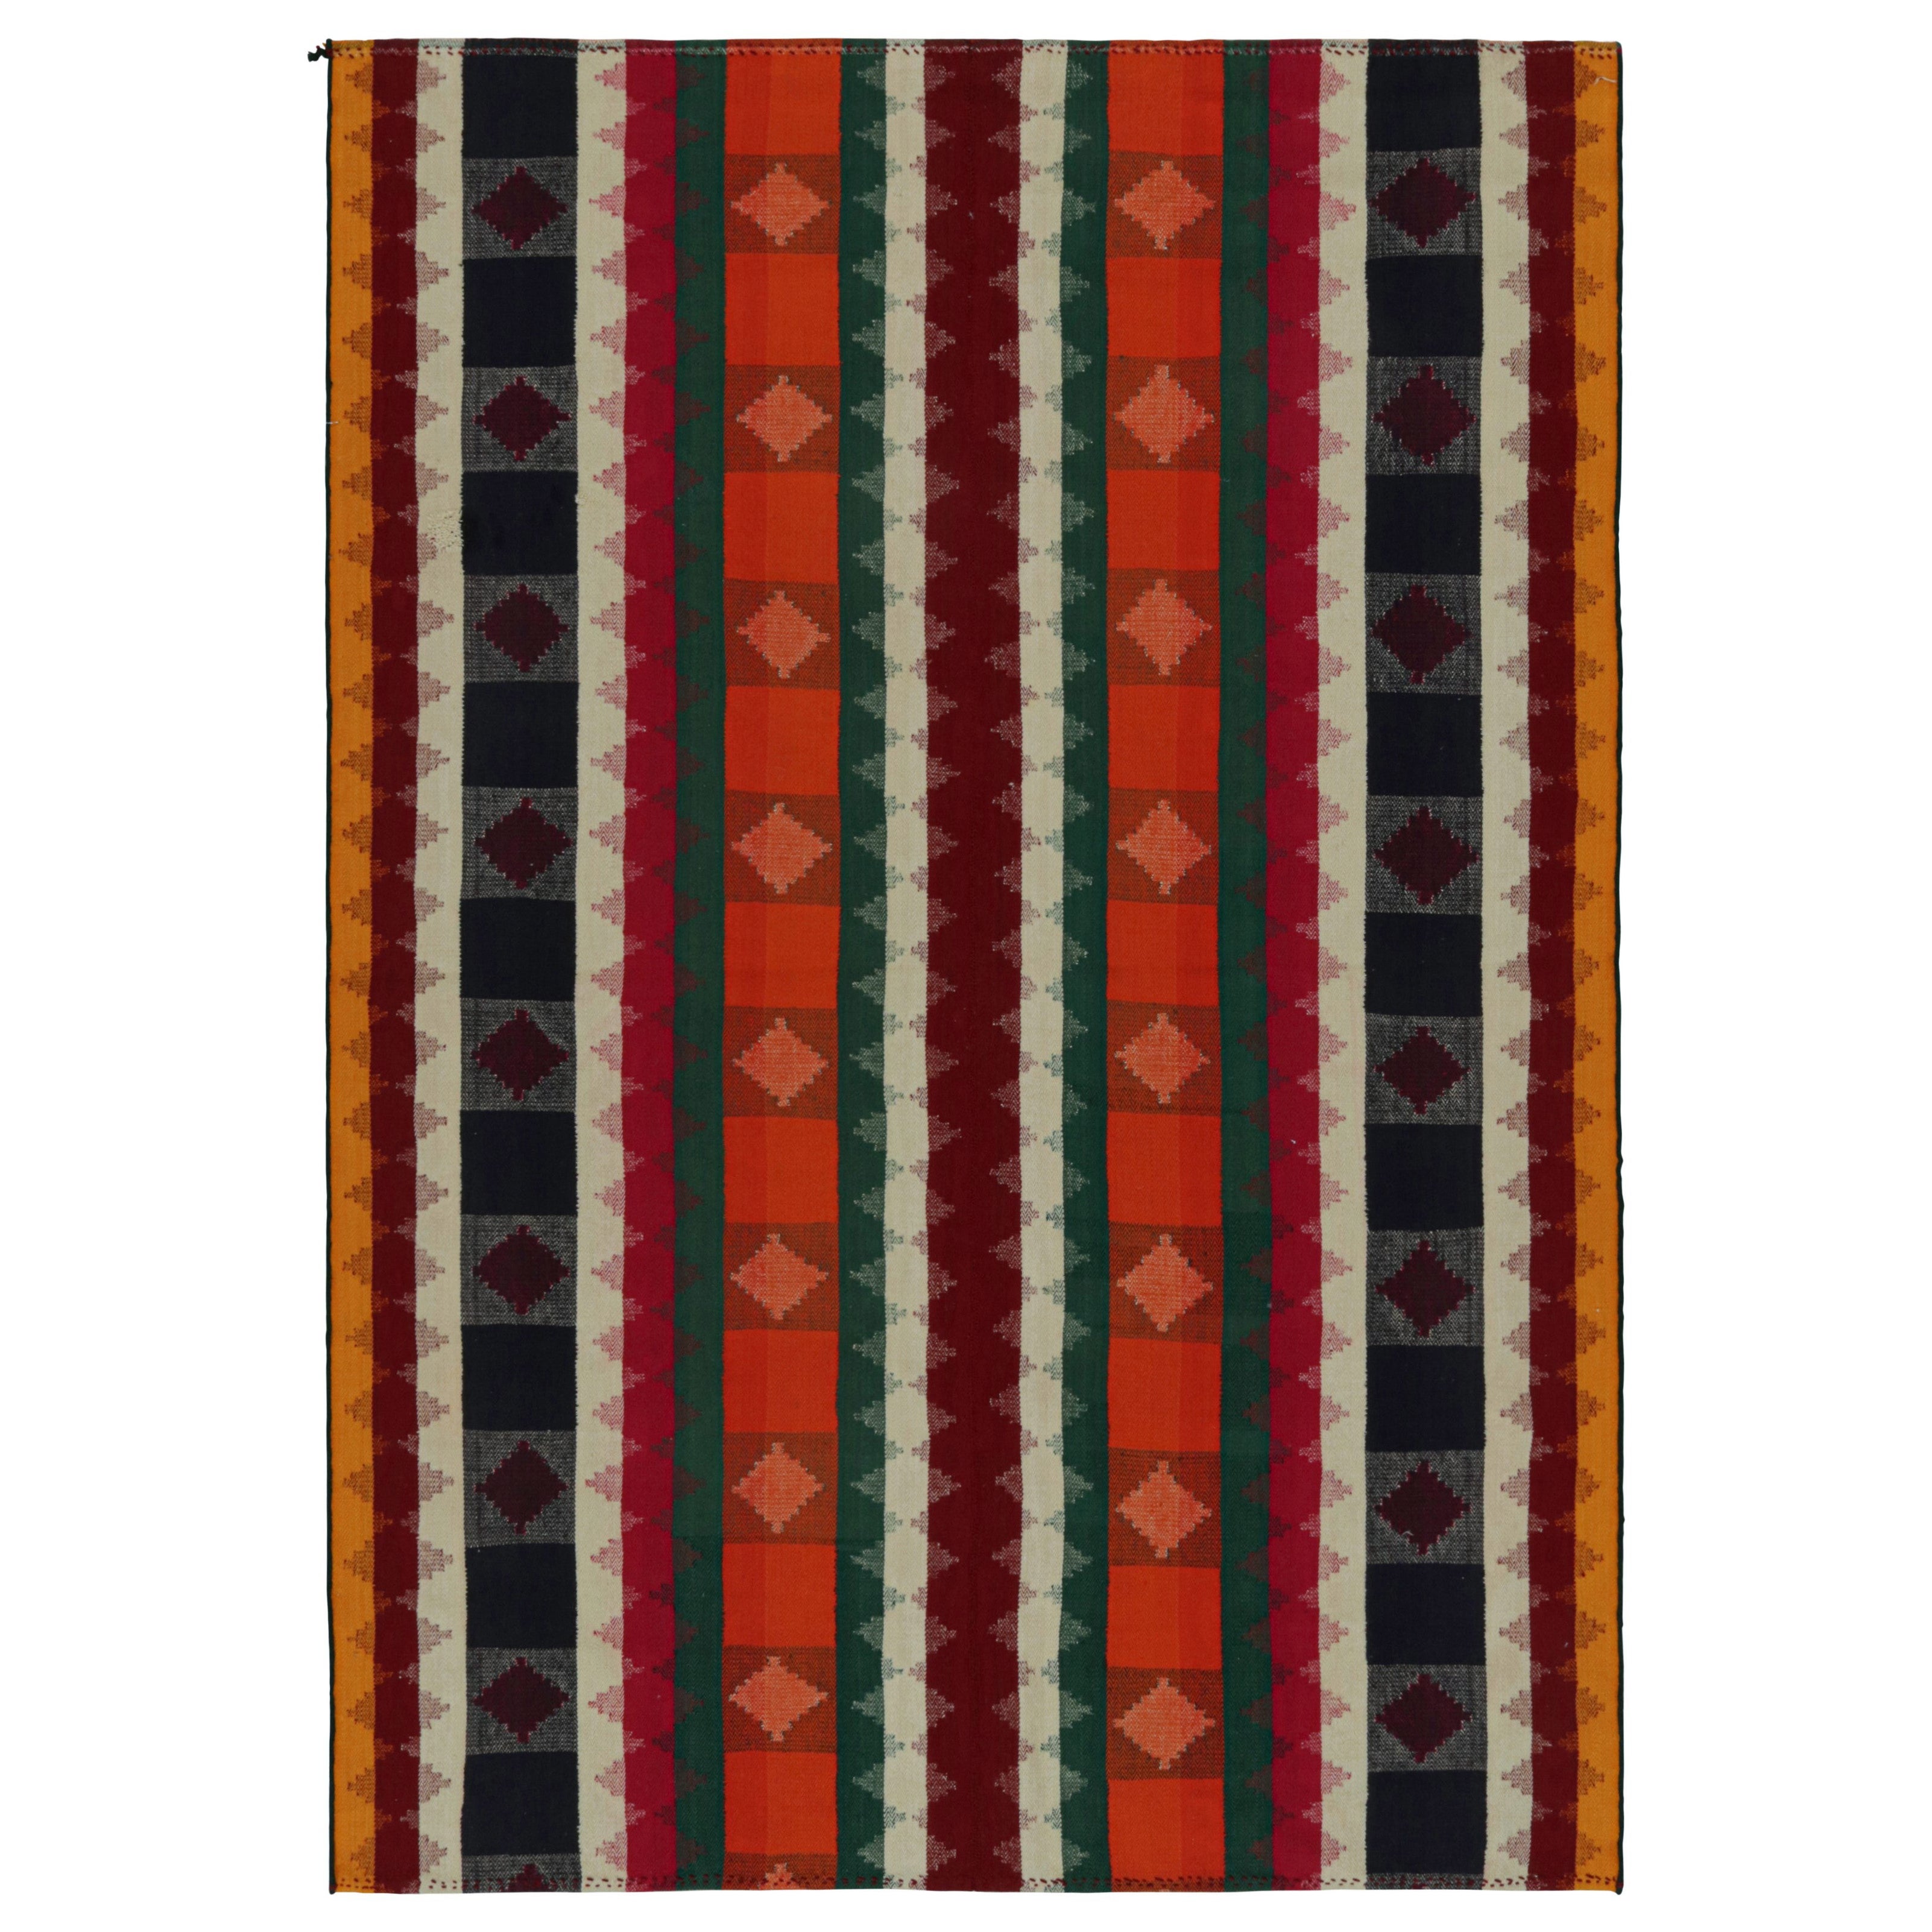 Vintage Afghani tribal Kilim rug, with Geometric patterns, from Rug & Kilim For Sale